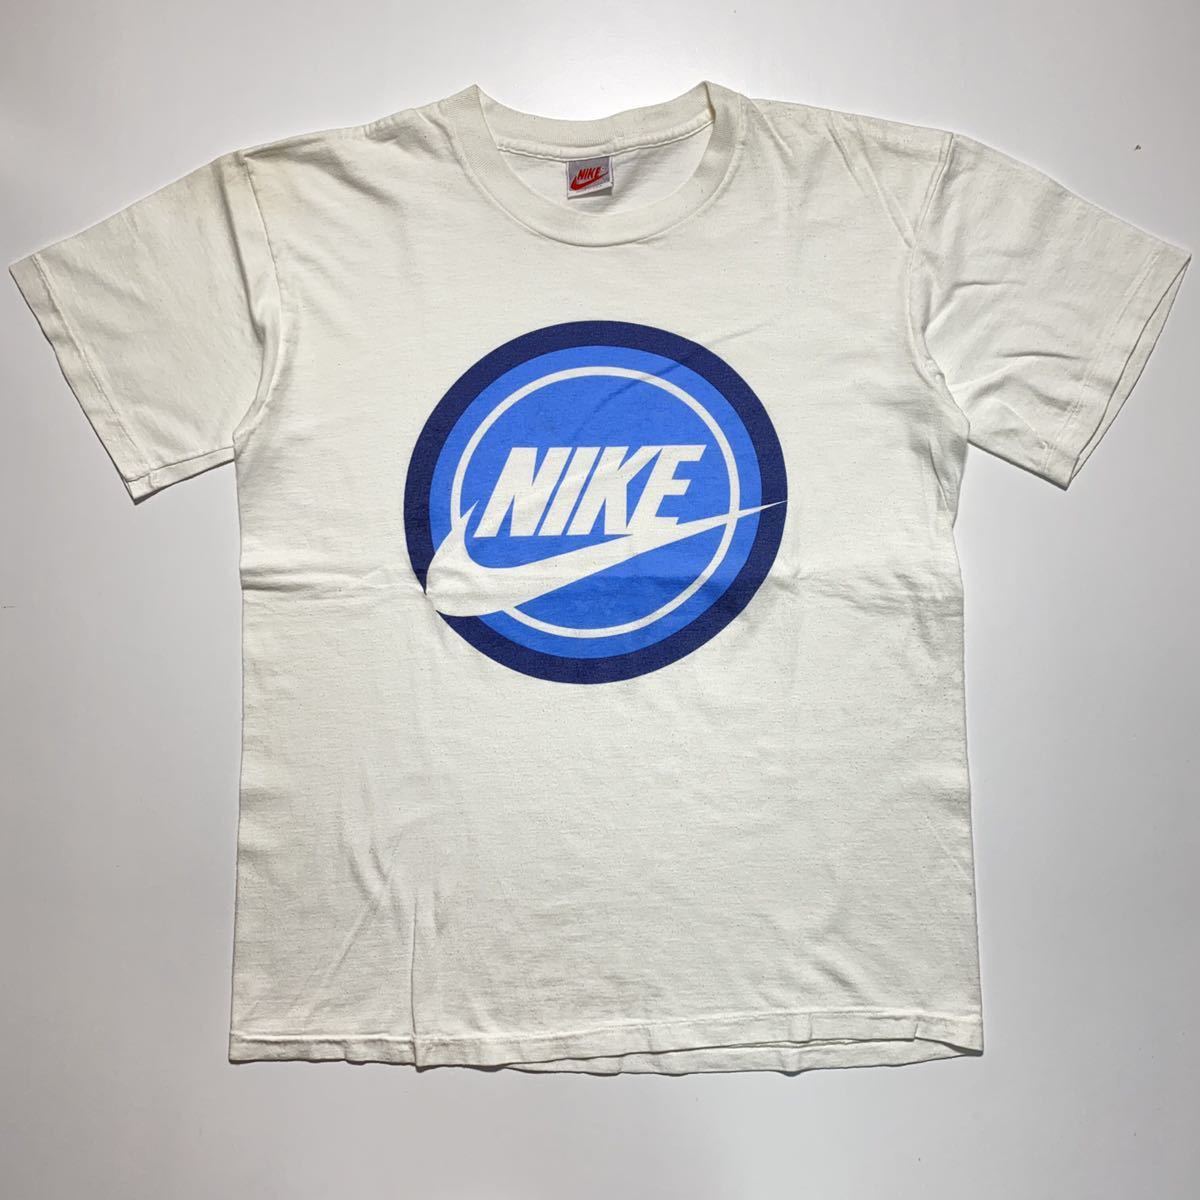 【M】90s NIKE LOGO PRINT S/S TEE 90年代 ナイキ ロゴ プリント 半袖Tシャツ Tシャツ USA製 銀タグ G989_画像1